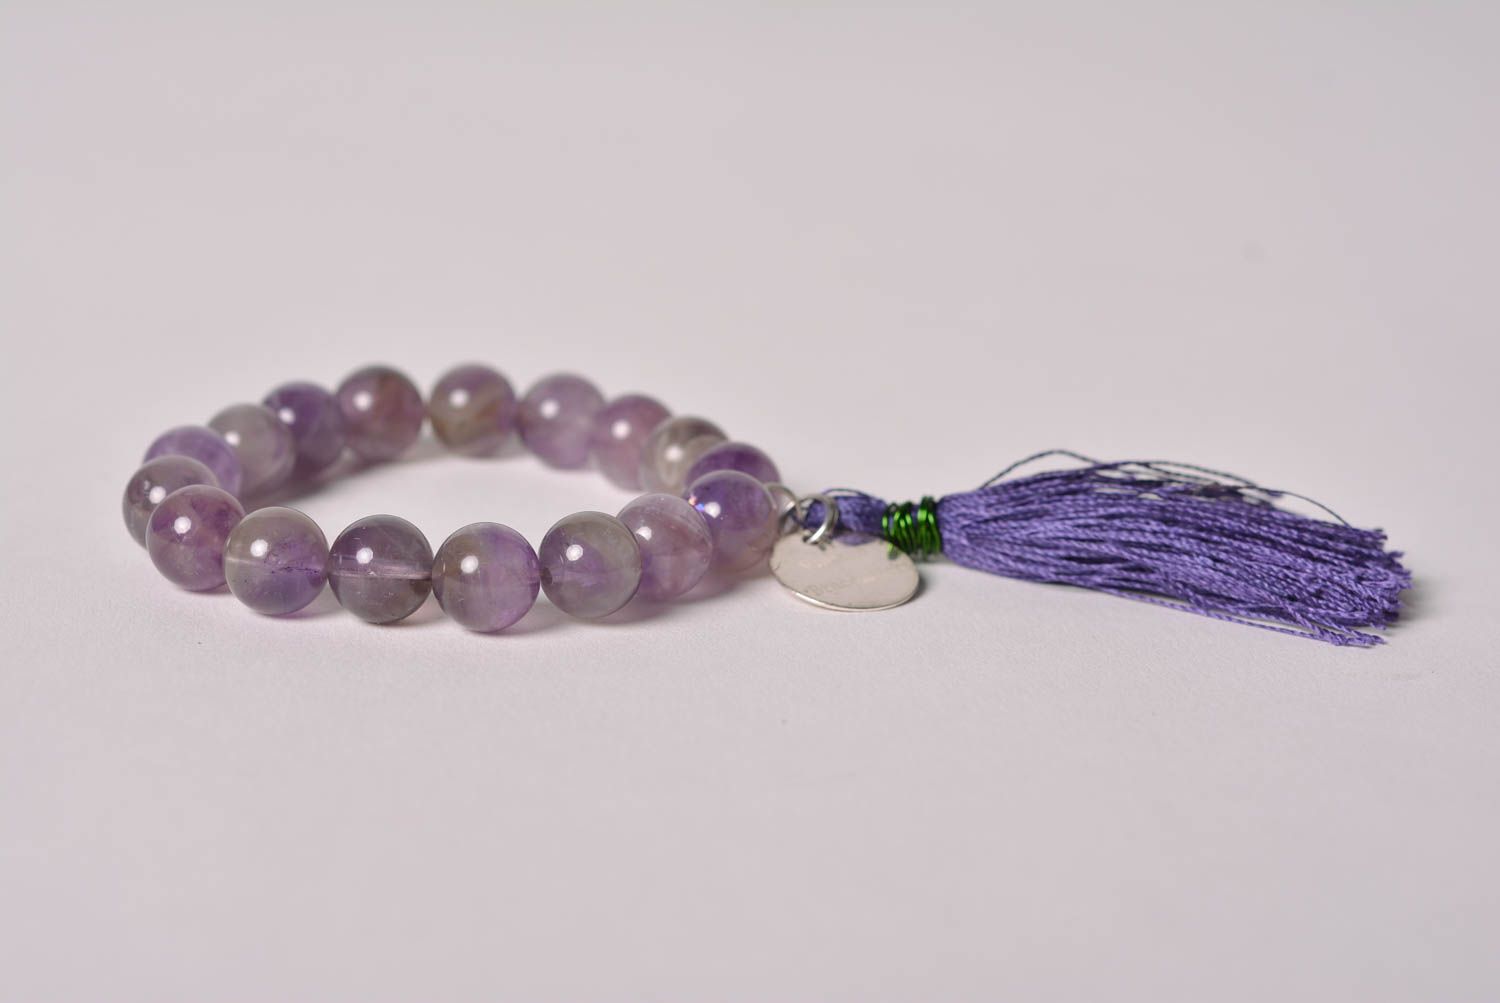 Handmade tender wrist bracelet with amethyst beads and thread tassel for women photo 4